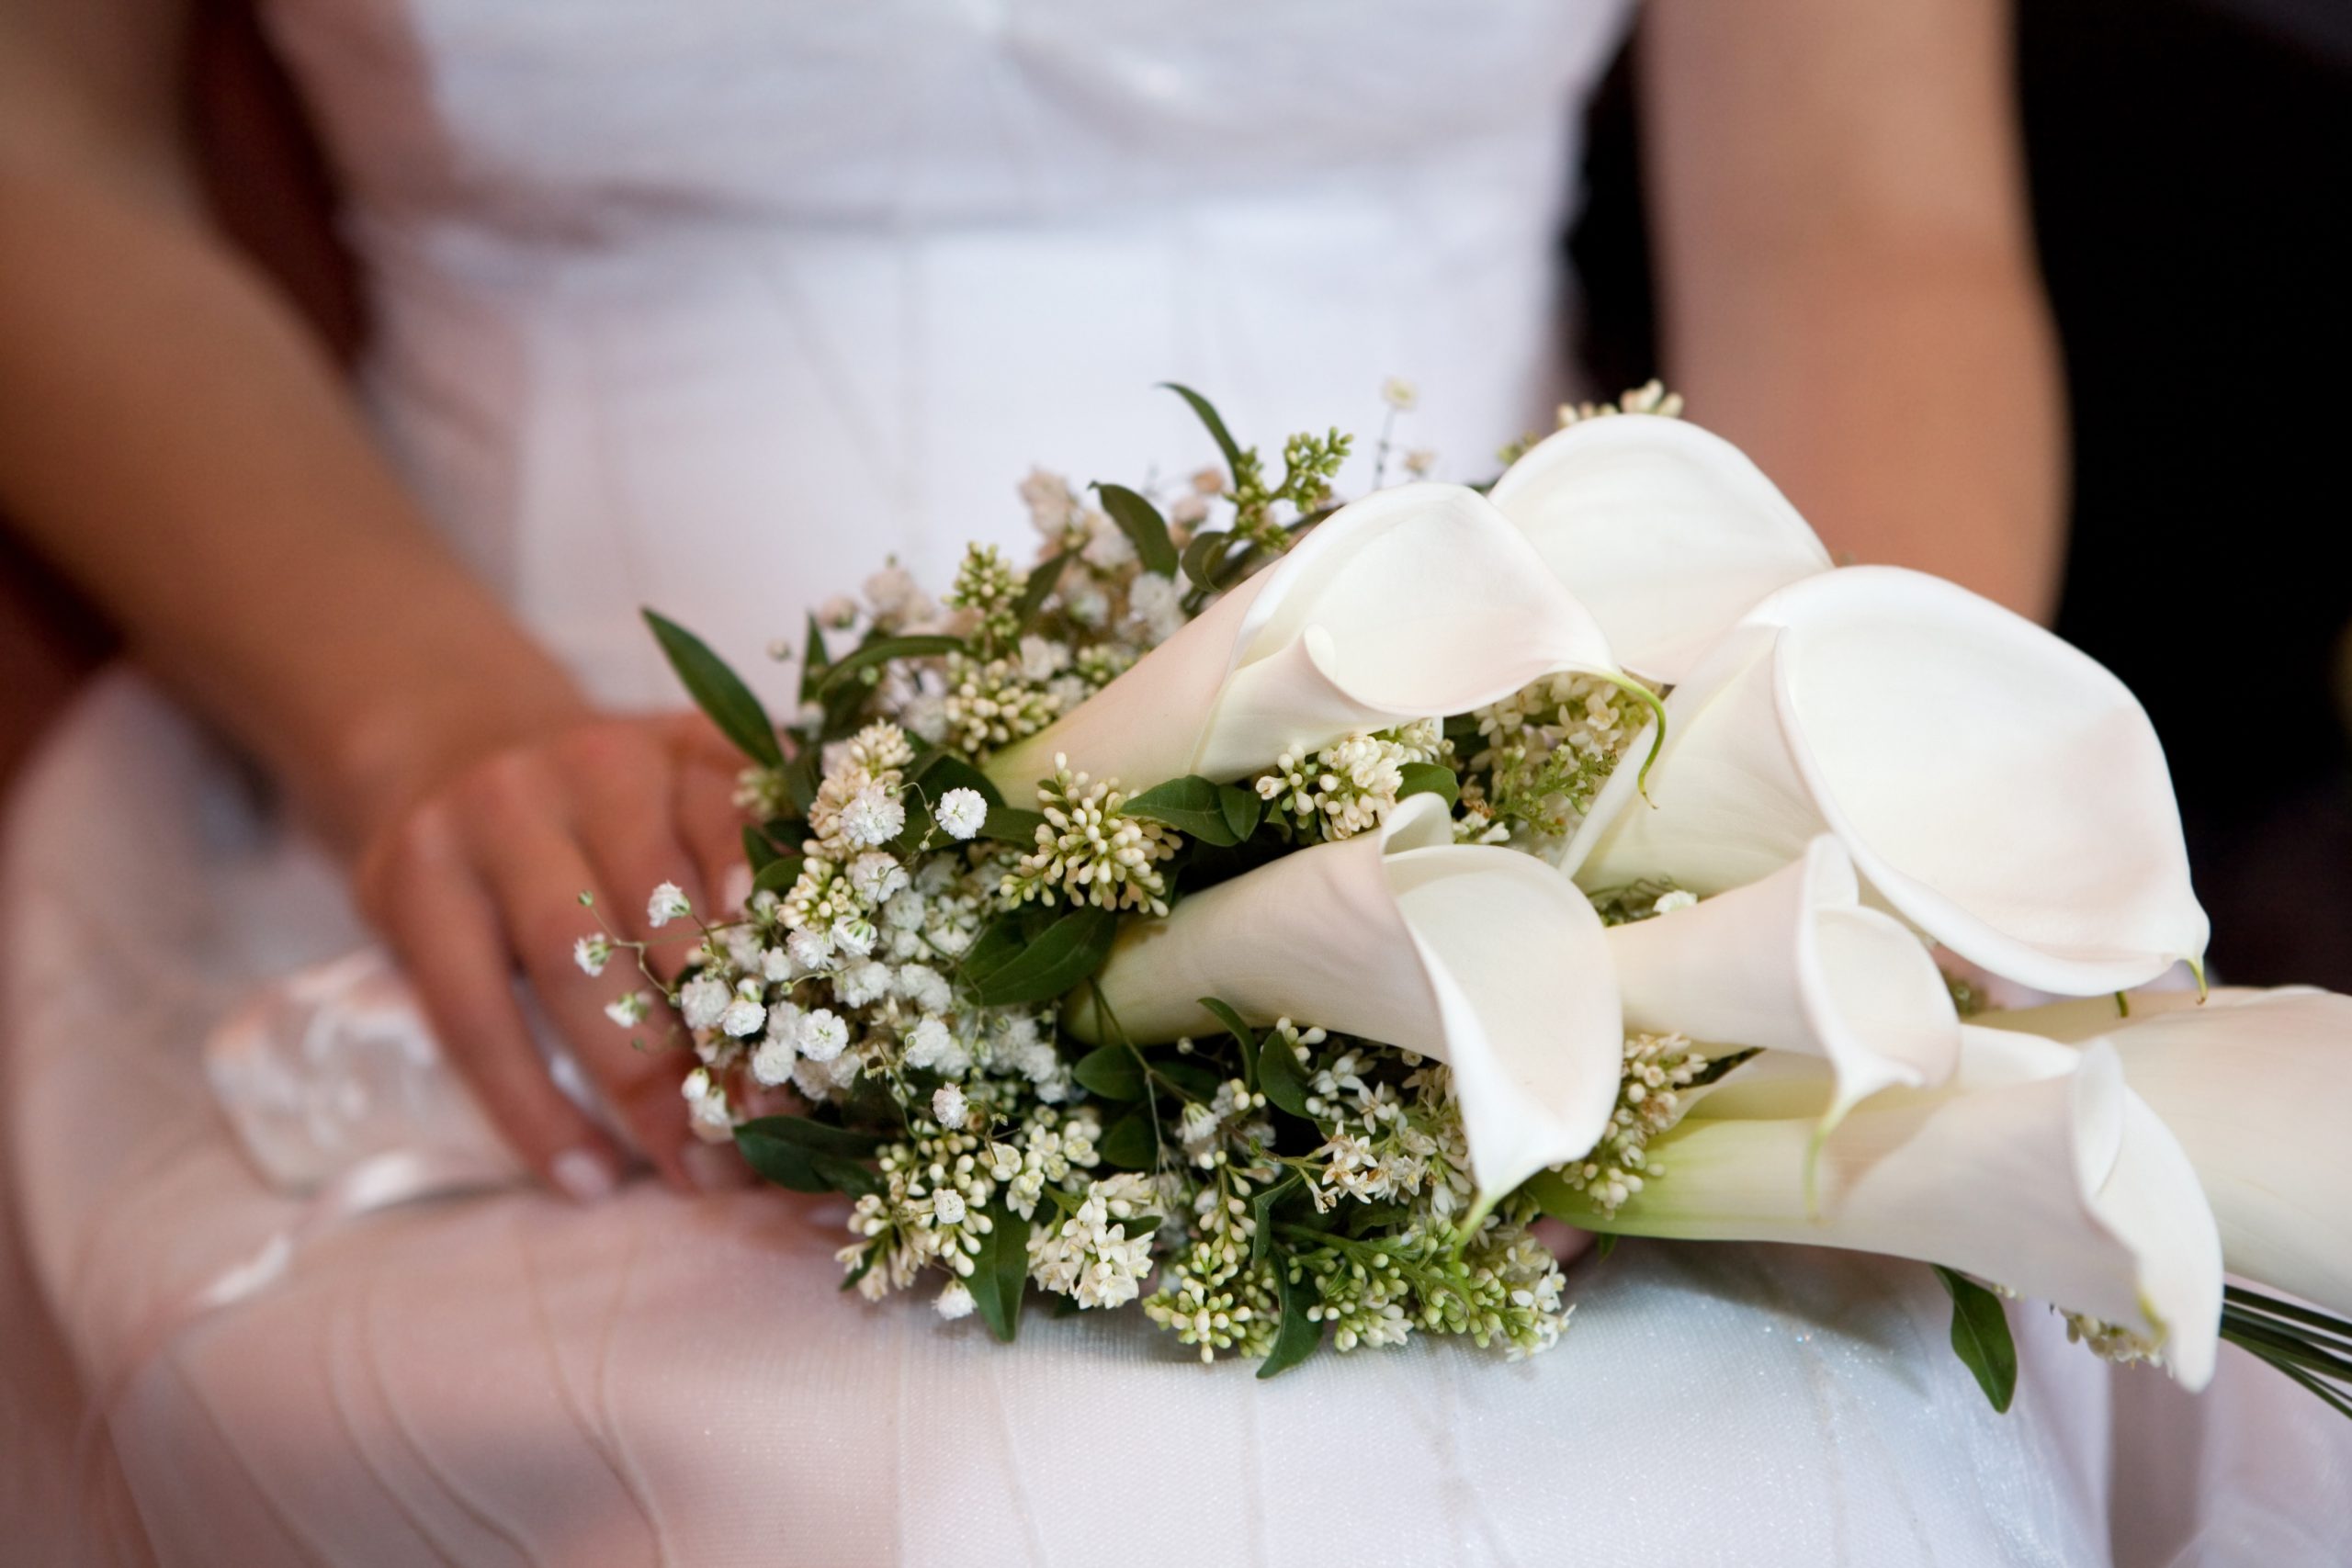 Magic Flowers - Brautstrauß weiße Calla